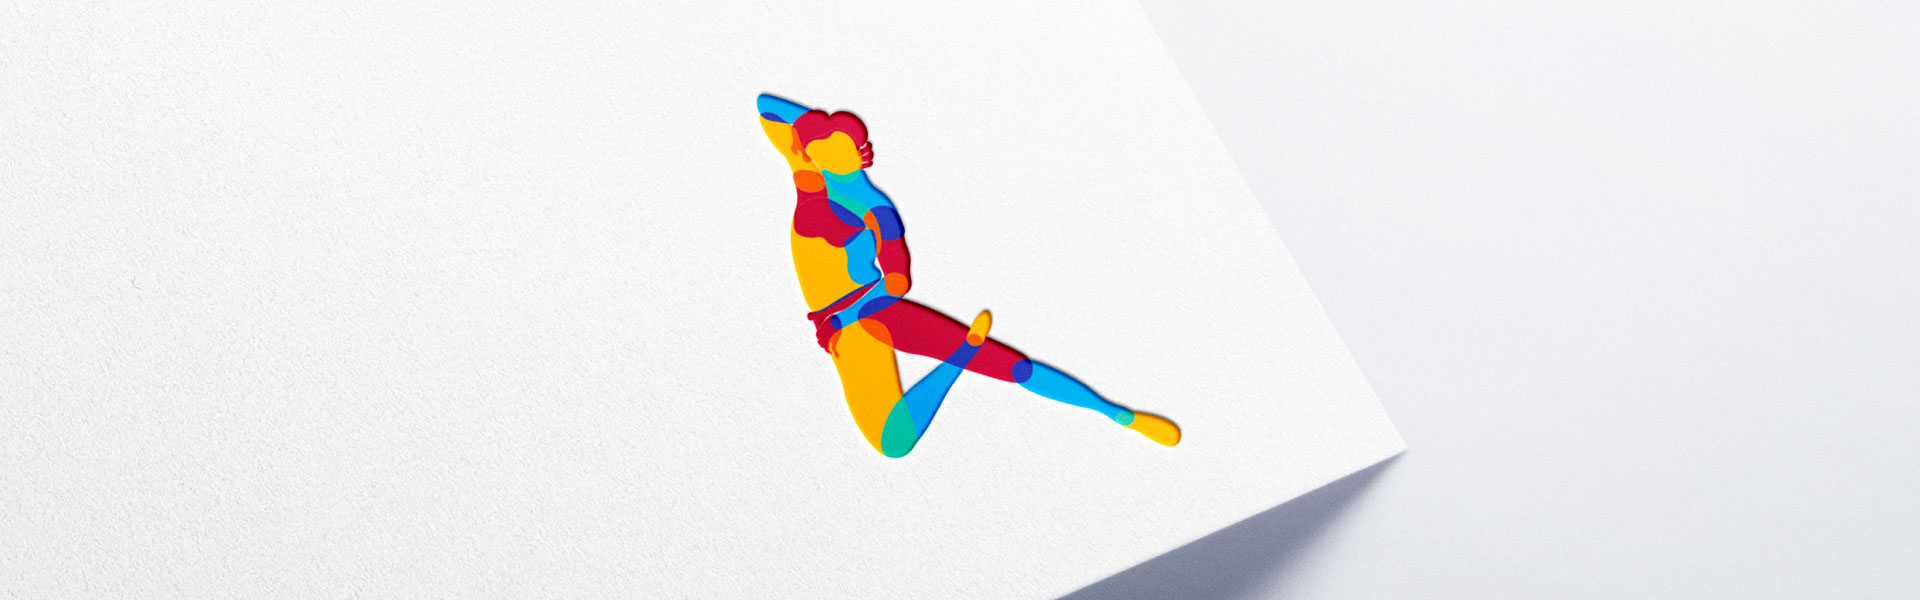 online-ballet-education-&-training-curvy-white-paper-mock